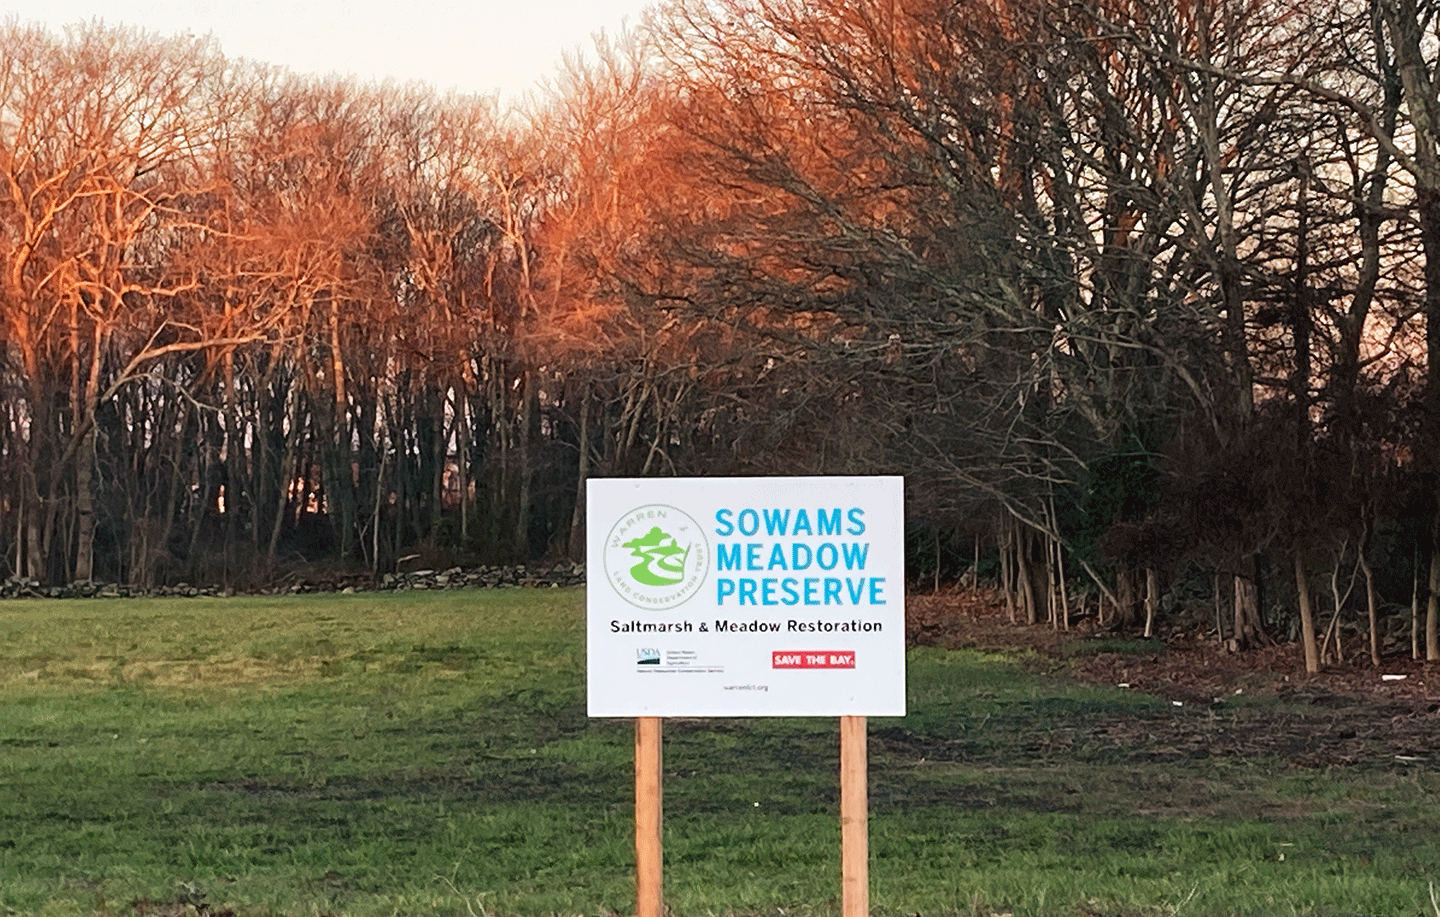 Sowam's Meadow Preserve wetlands restoration sign in Warren, RI, Dec. 2, 2022